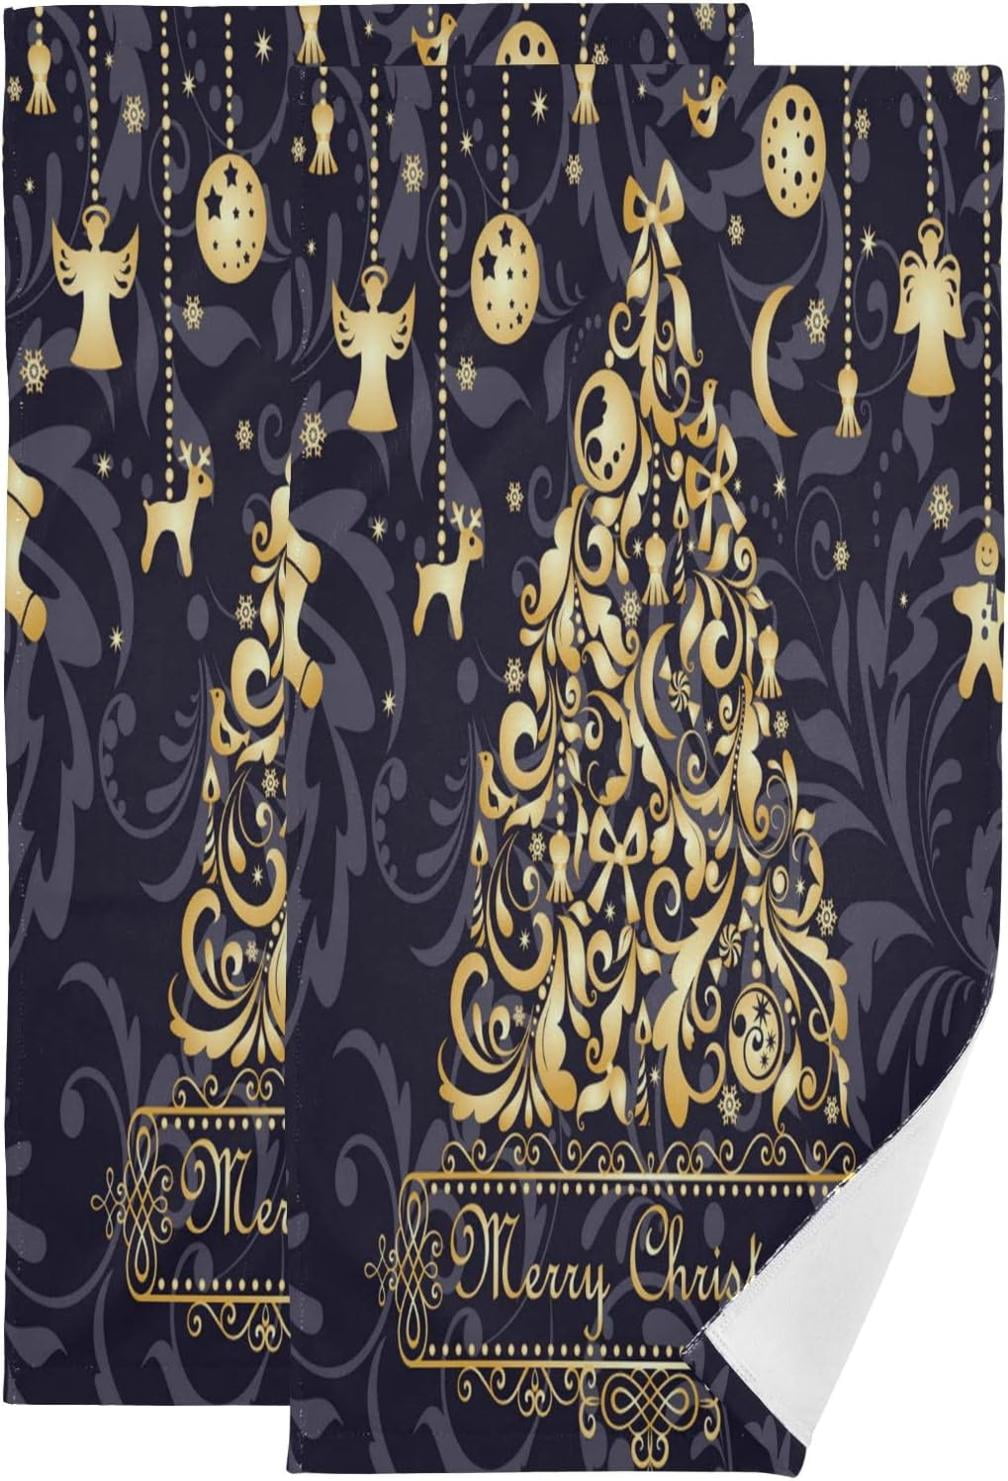 BALSAM & FIR KITCHEN TEA TOWELS (3 ) MERRY CHRISTMAS BLACK CHECK GOLD TREE  NWT